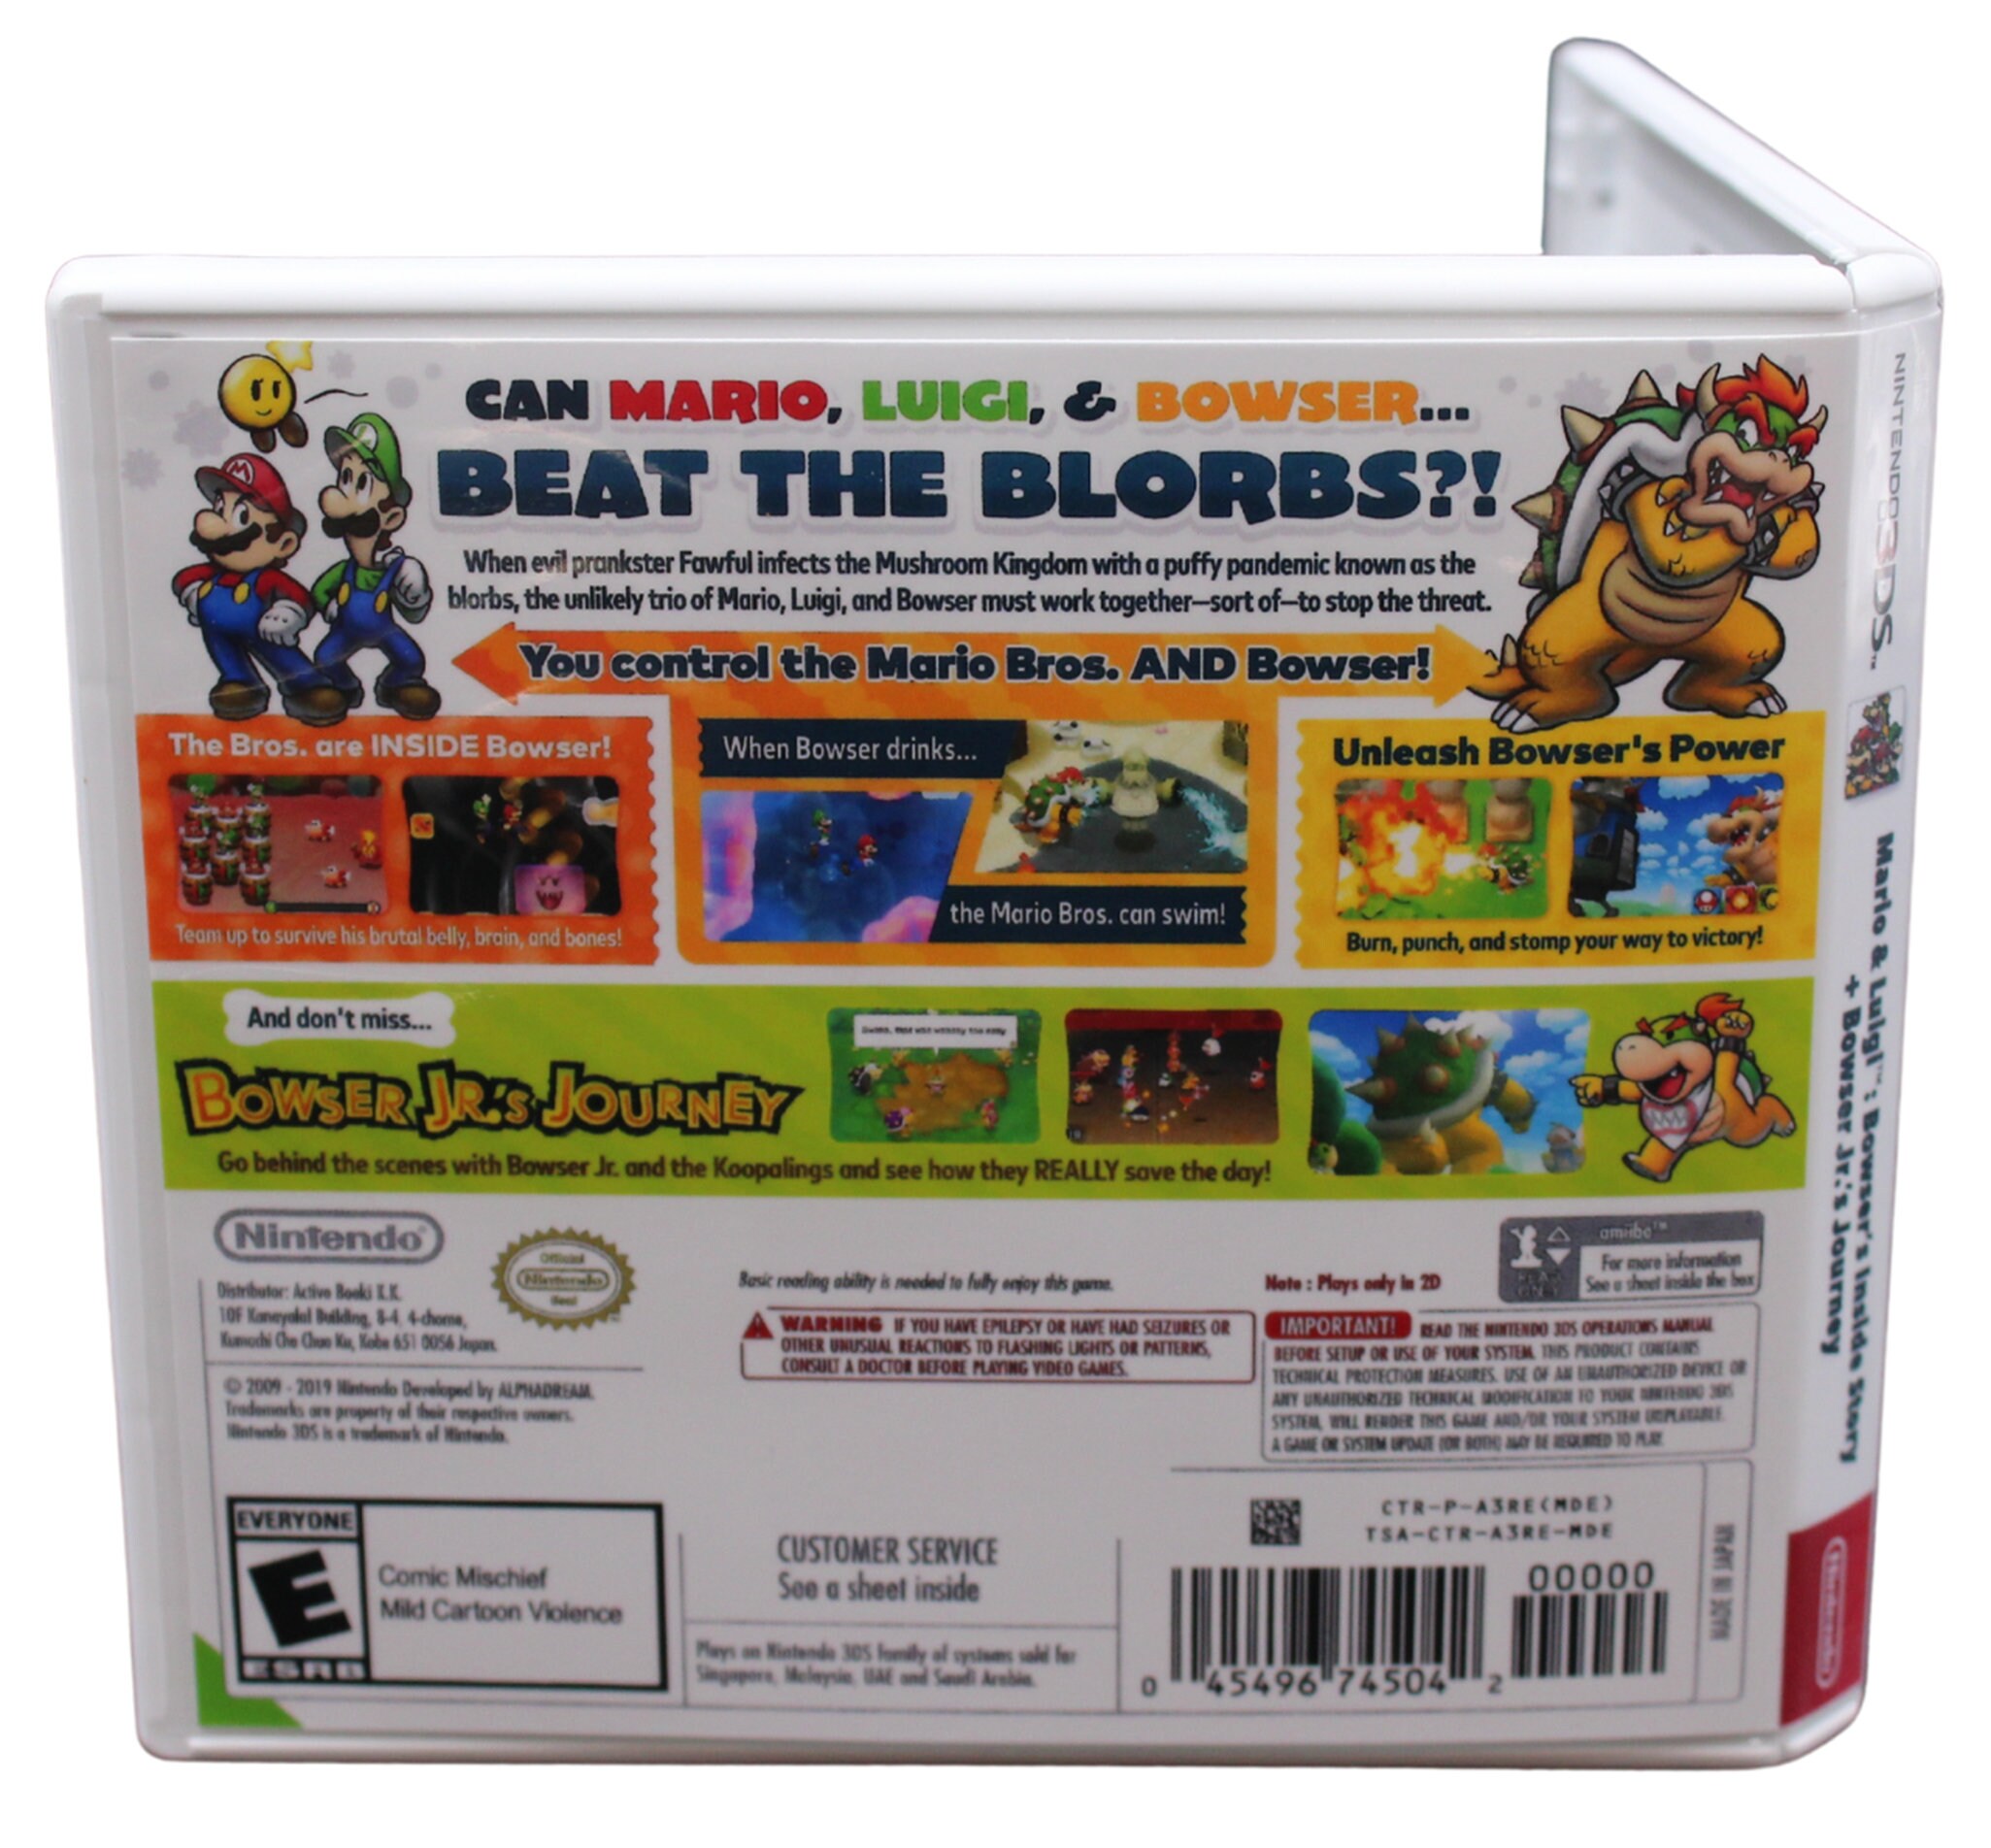 Mario and Luigi: Bowsers Inside Story Plus Bowser Jr.'s Journey - Nintendo  3DS, Nintendo 3DS